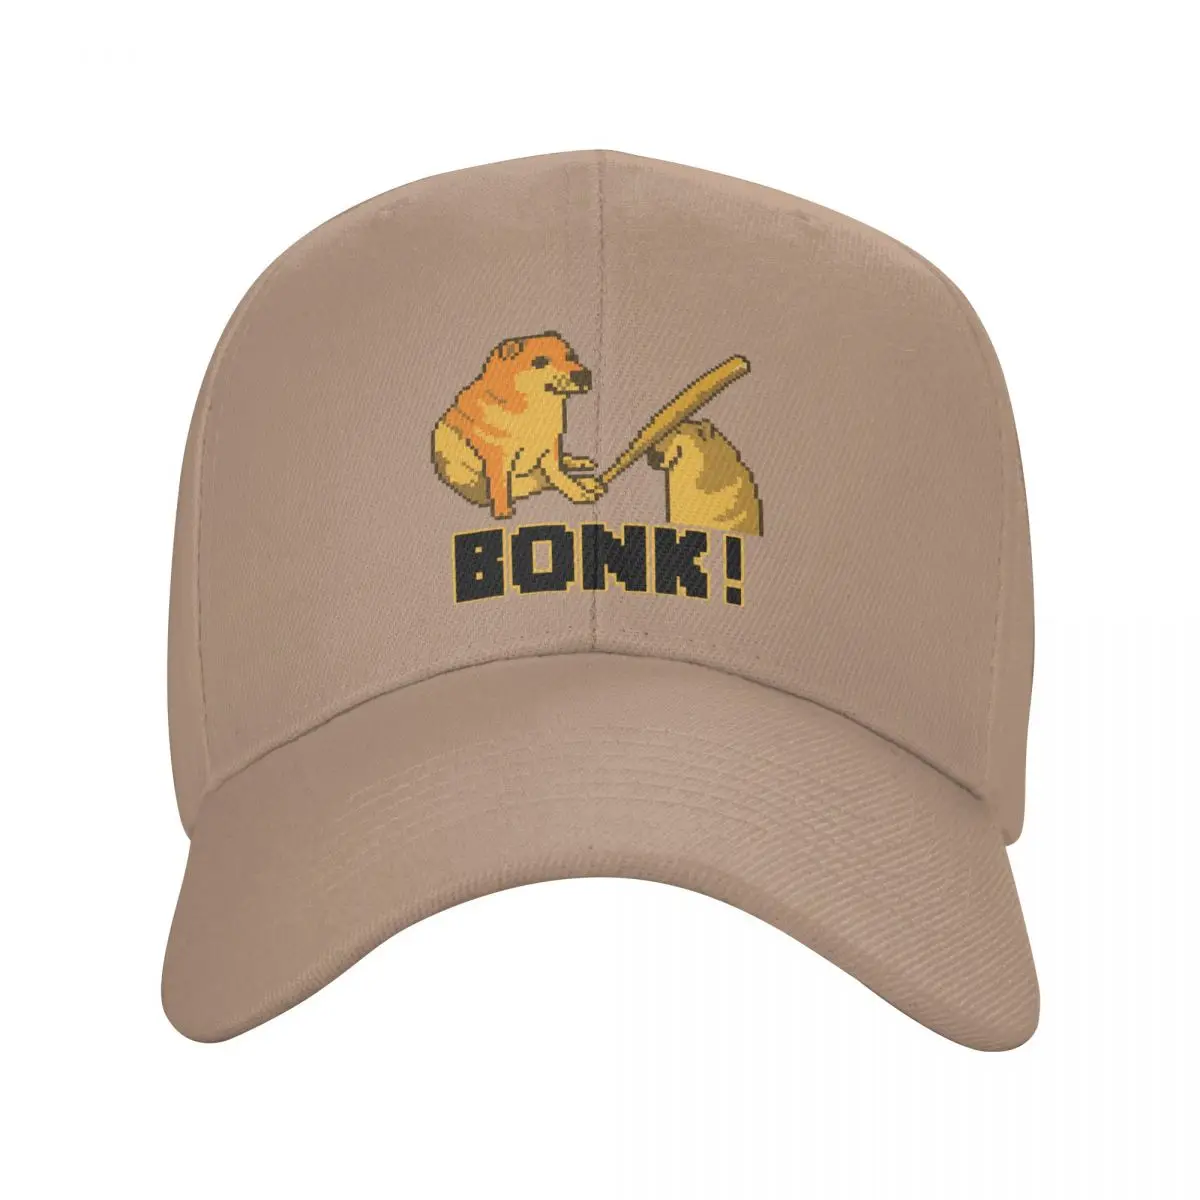 

Classic Unisex Cheems Bonk Meme Pixel Art Baseball Cap Adult Shiba Inu Dog Adjustable Dad Hat Women Men Hip Hop Snapback Caps